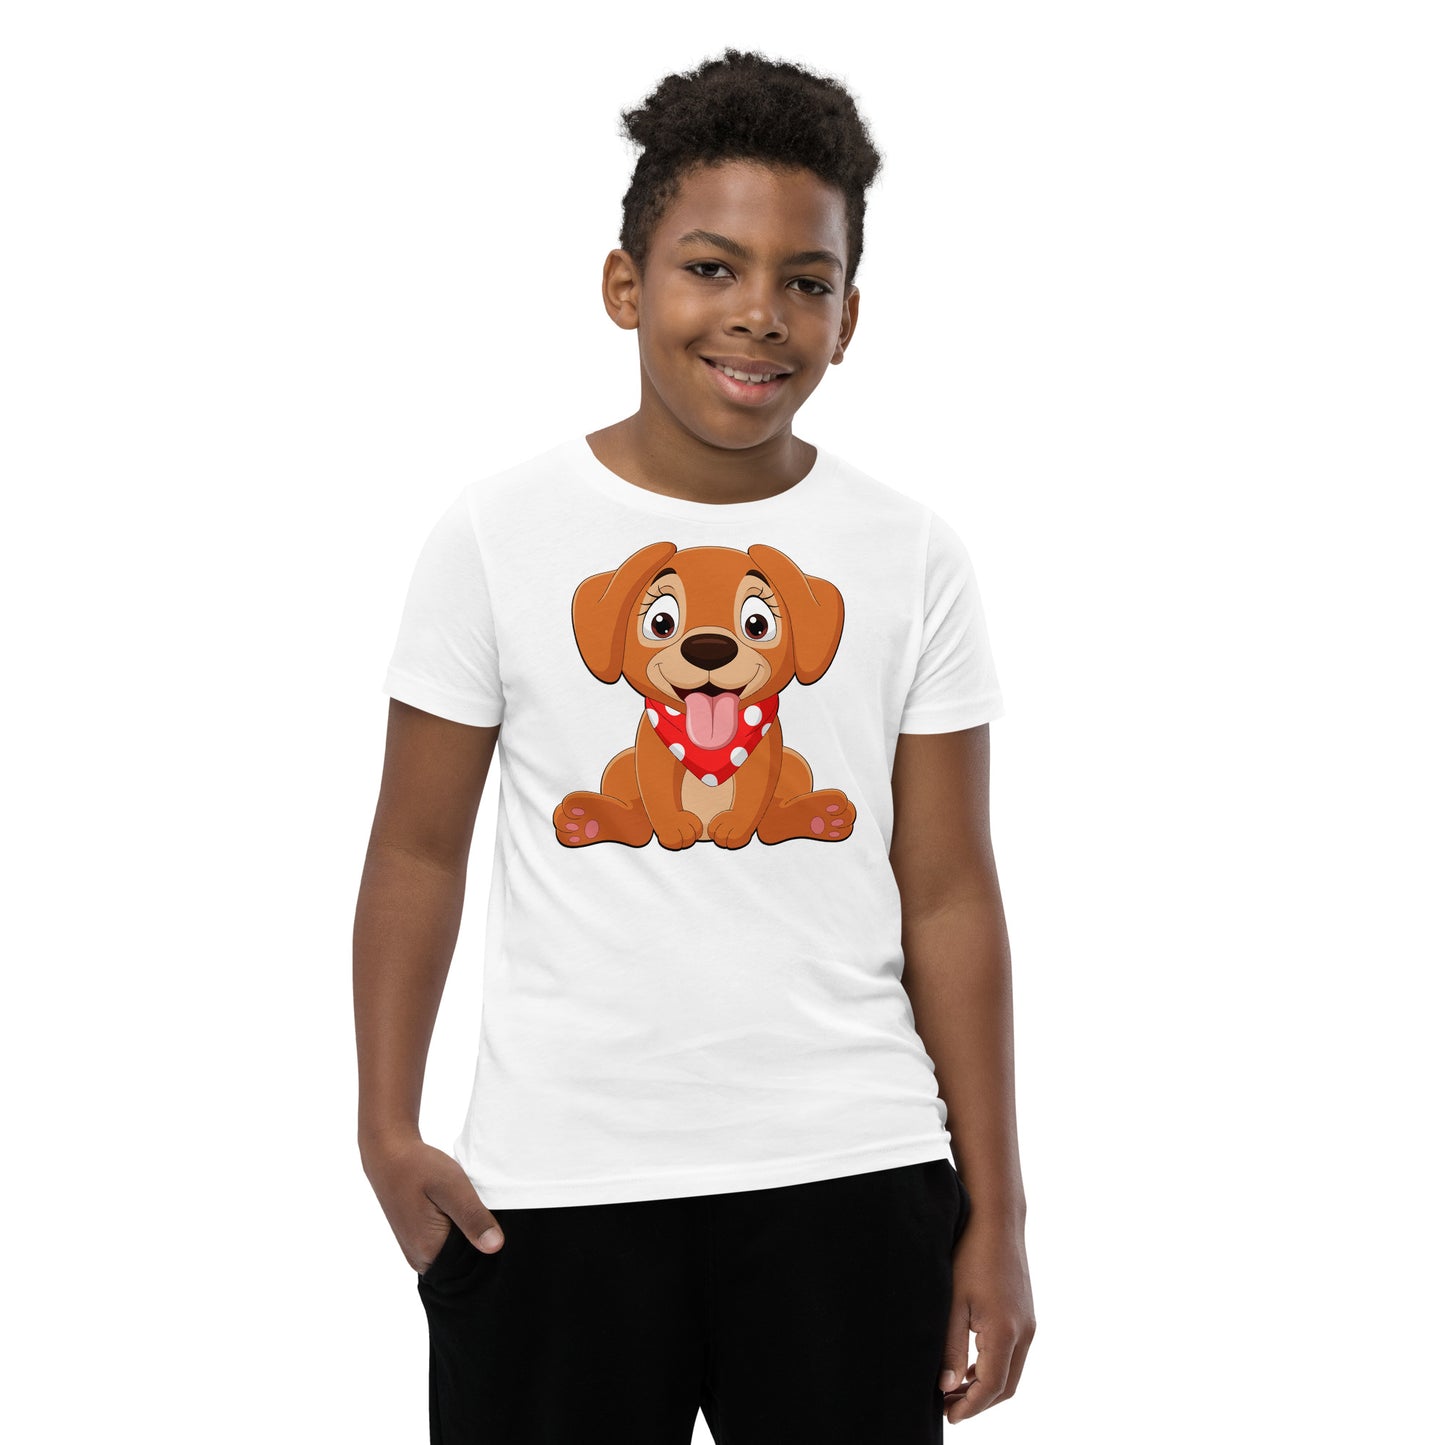 Cute Baby Dog Sitting T-shirt, No. 0147